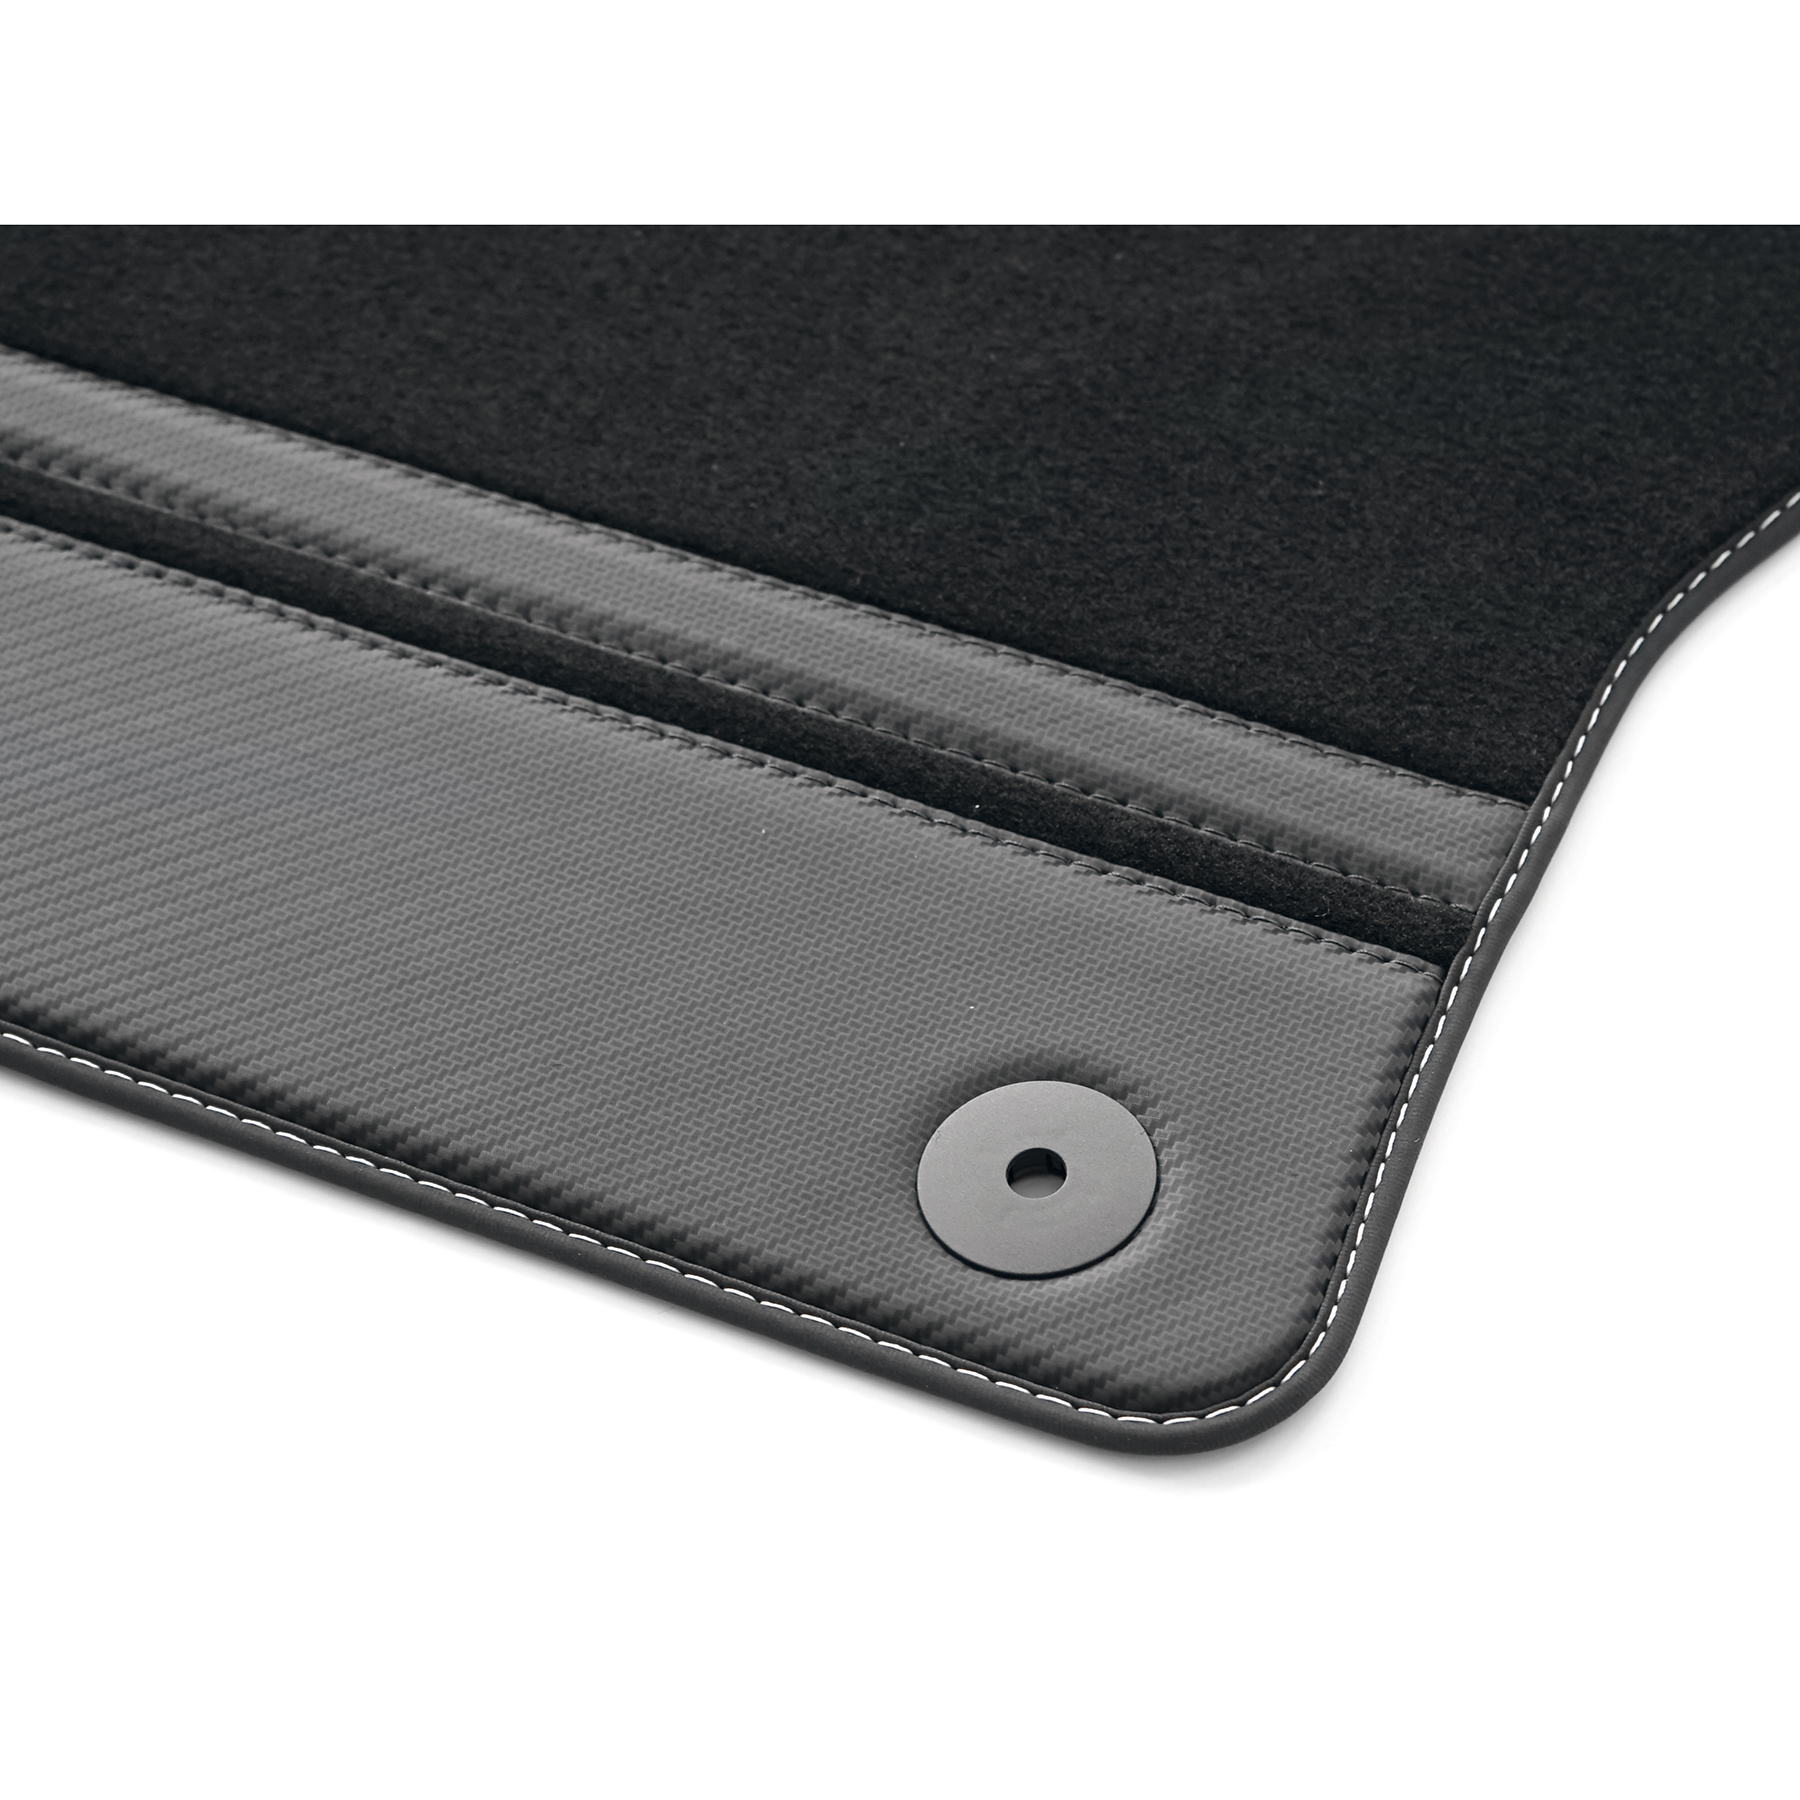 Original Seat Leon 4 (KL) Textil Fußmatten Carbon-Effekt 4x